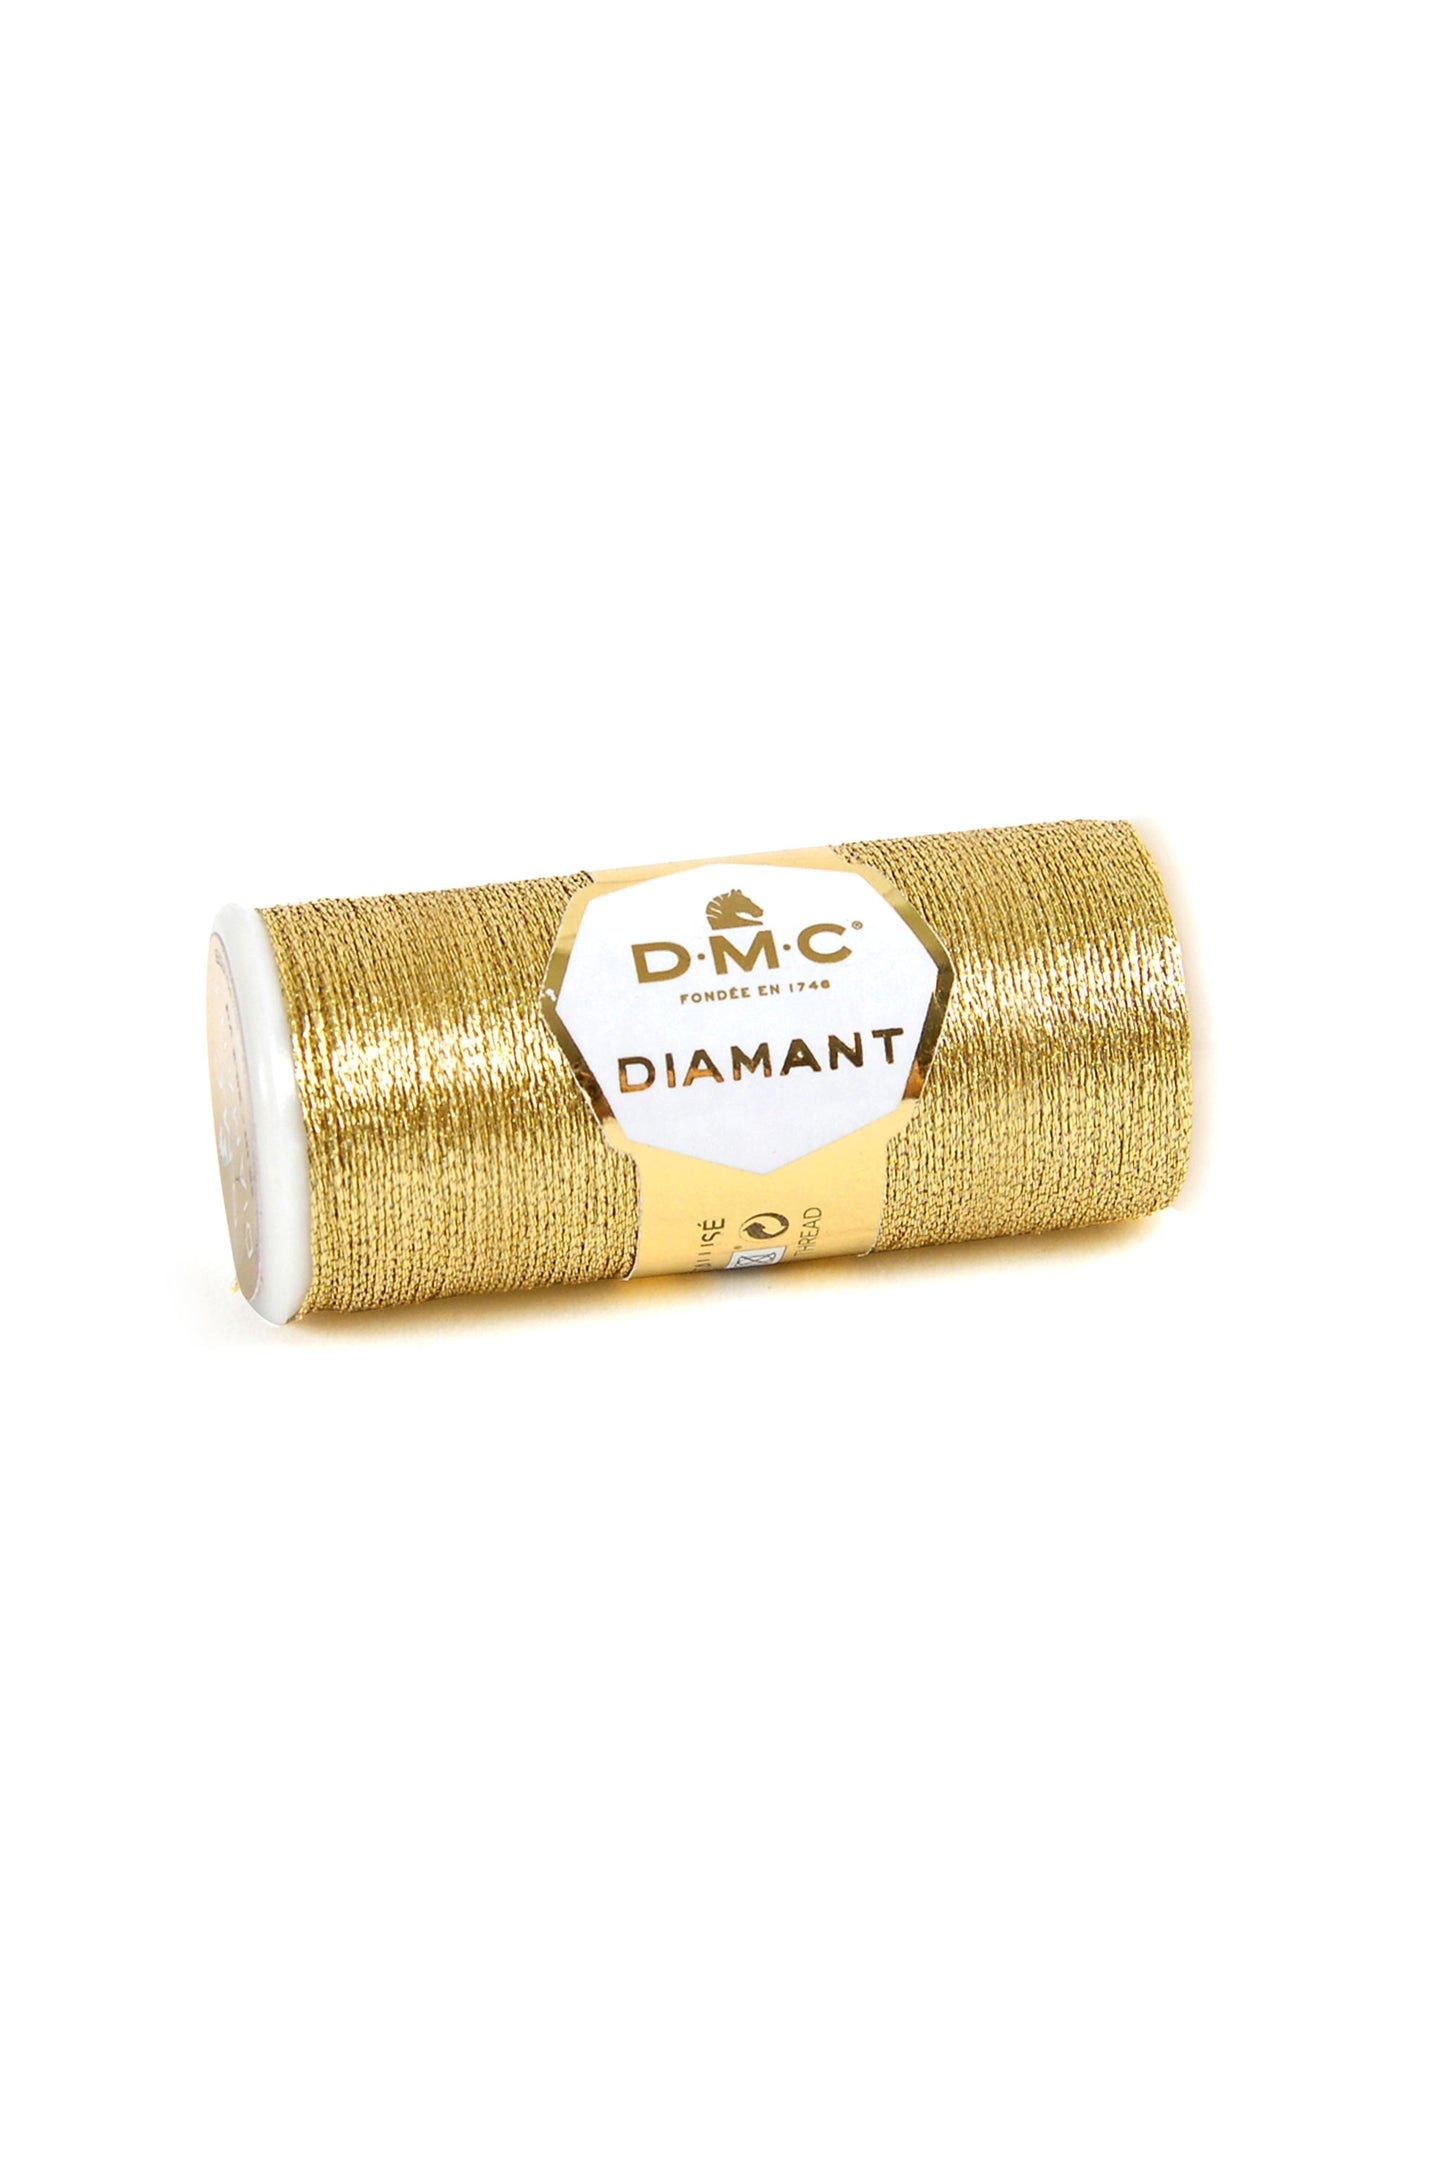 D3821 Light Gold – DMC Diamant metallic thread